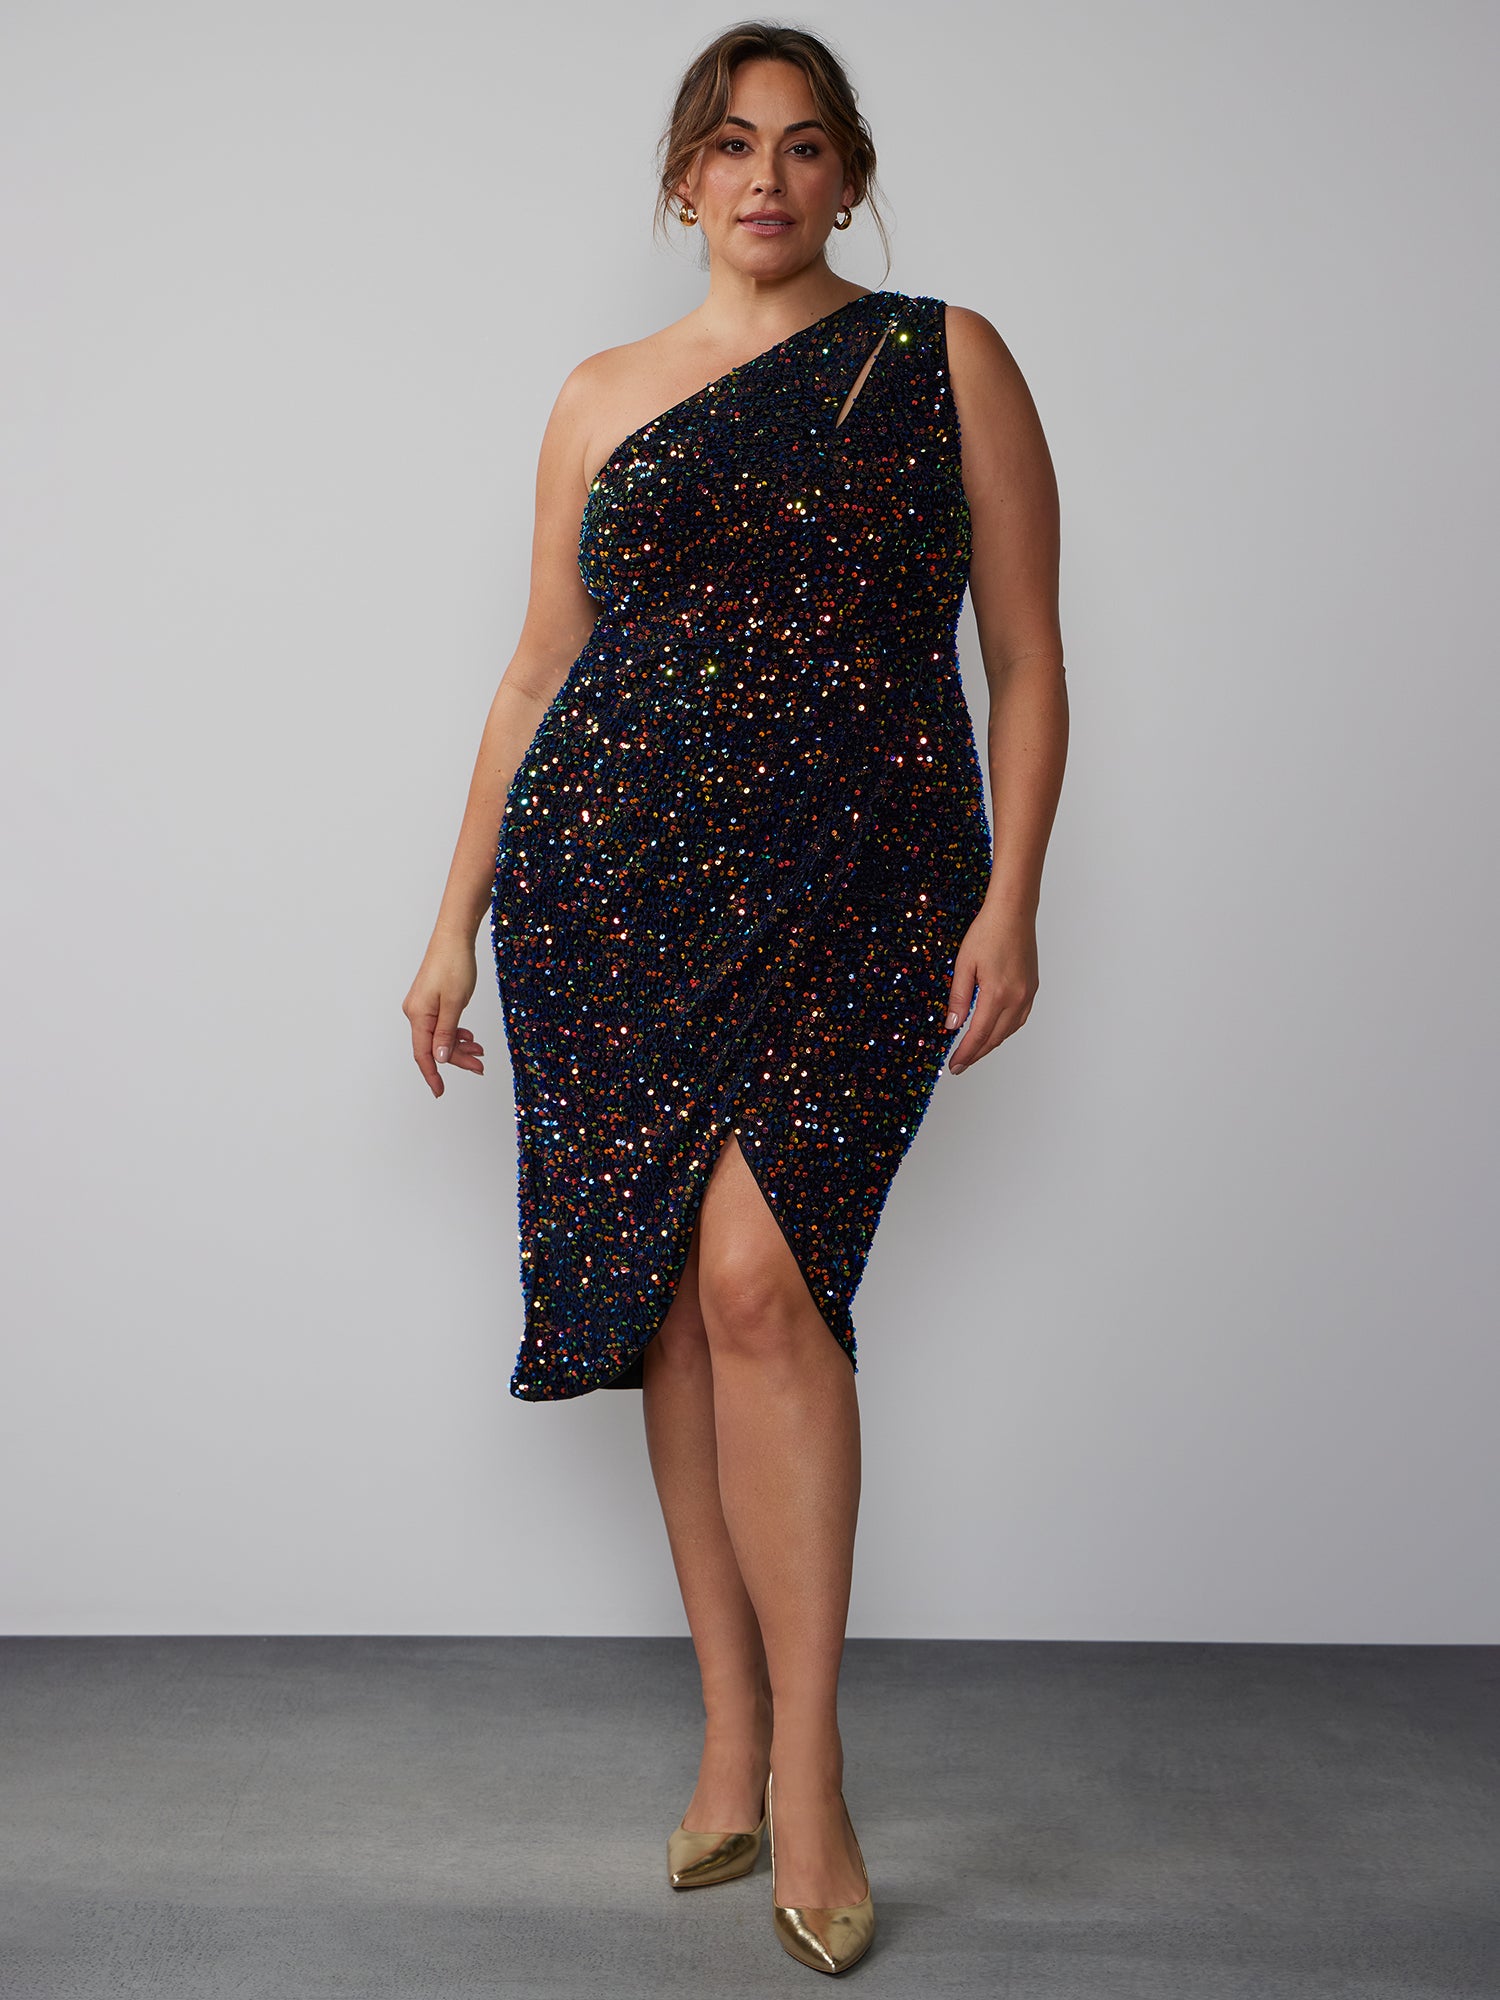 Sherri Hill Short Ombre Sequin Dress 55302 – Terry Costa